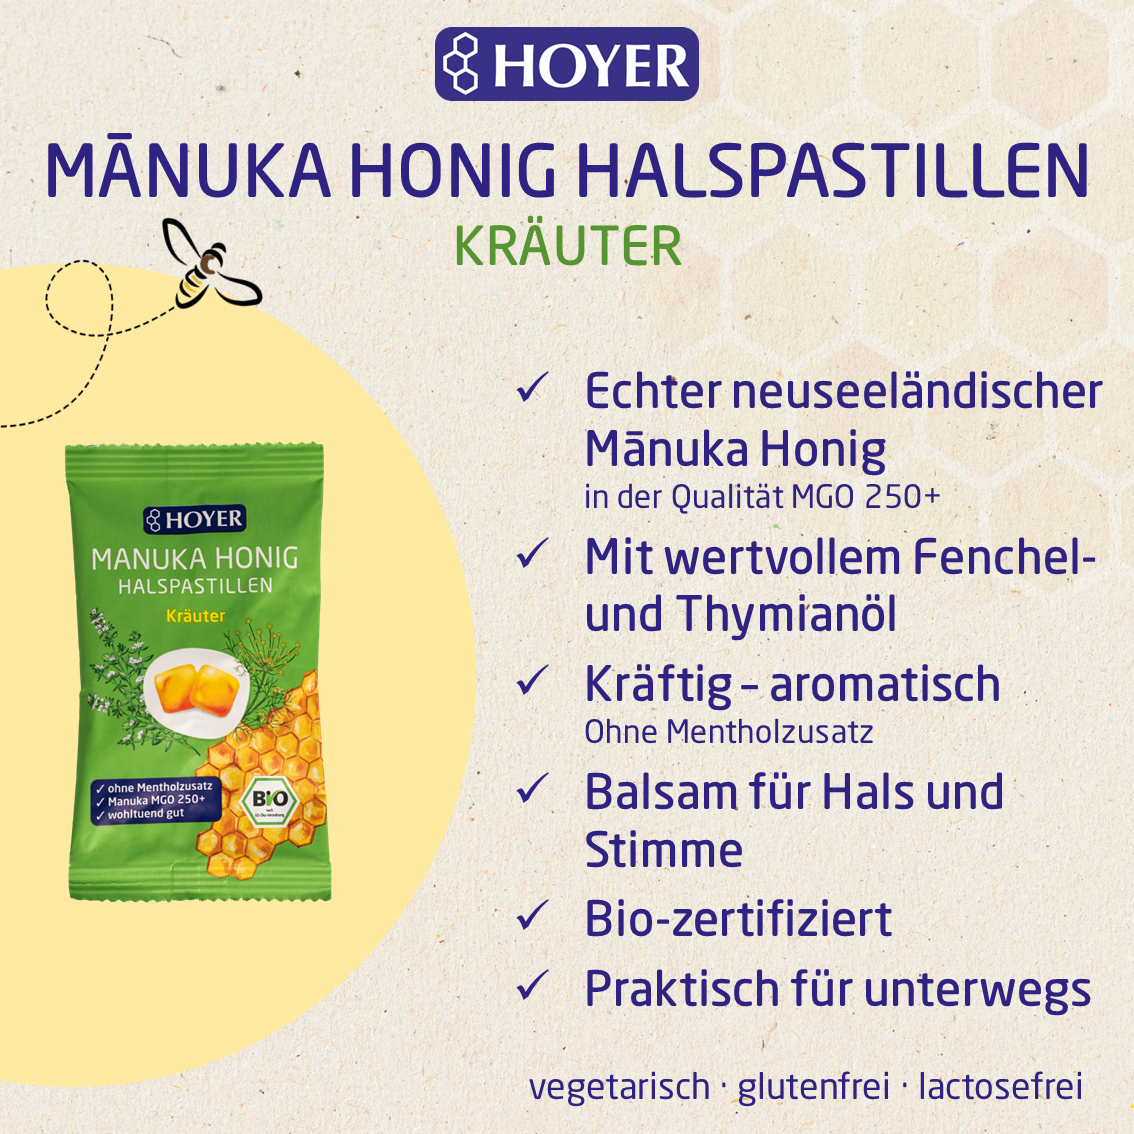 Manuka Honey Throat Pastilles Herbs